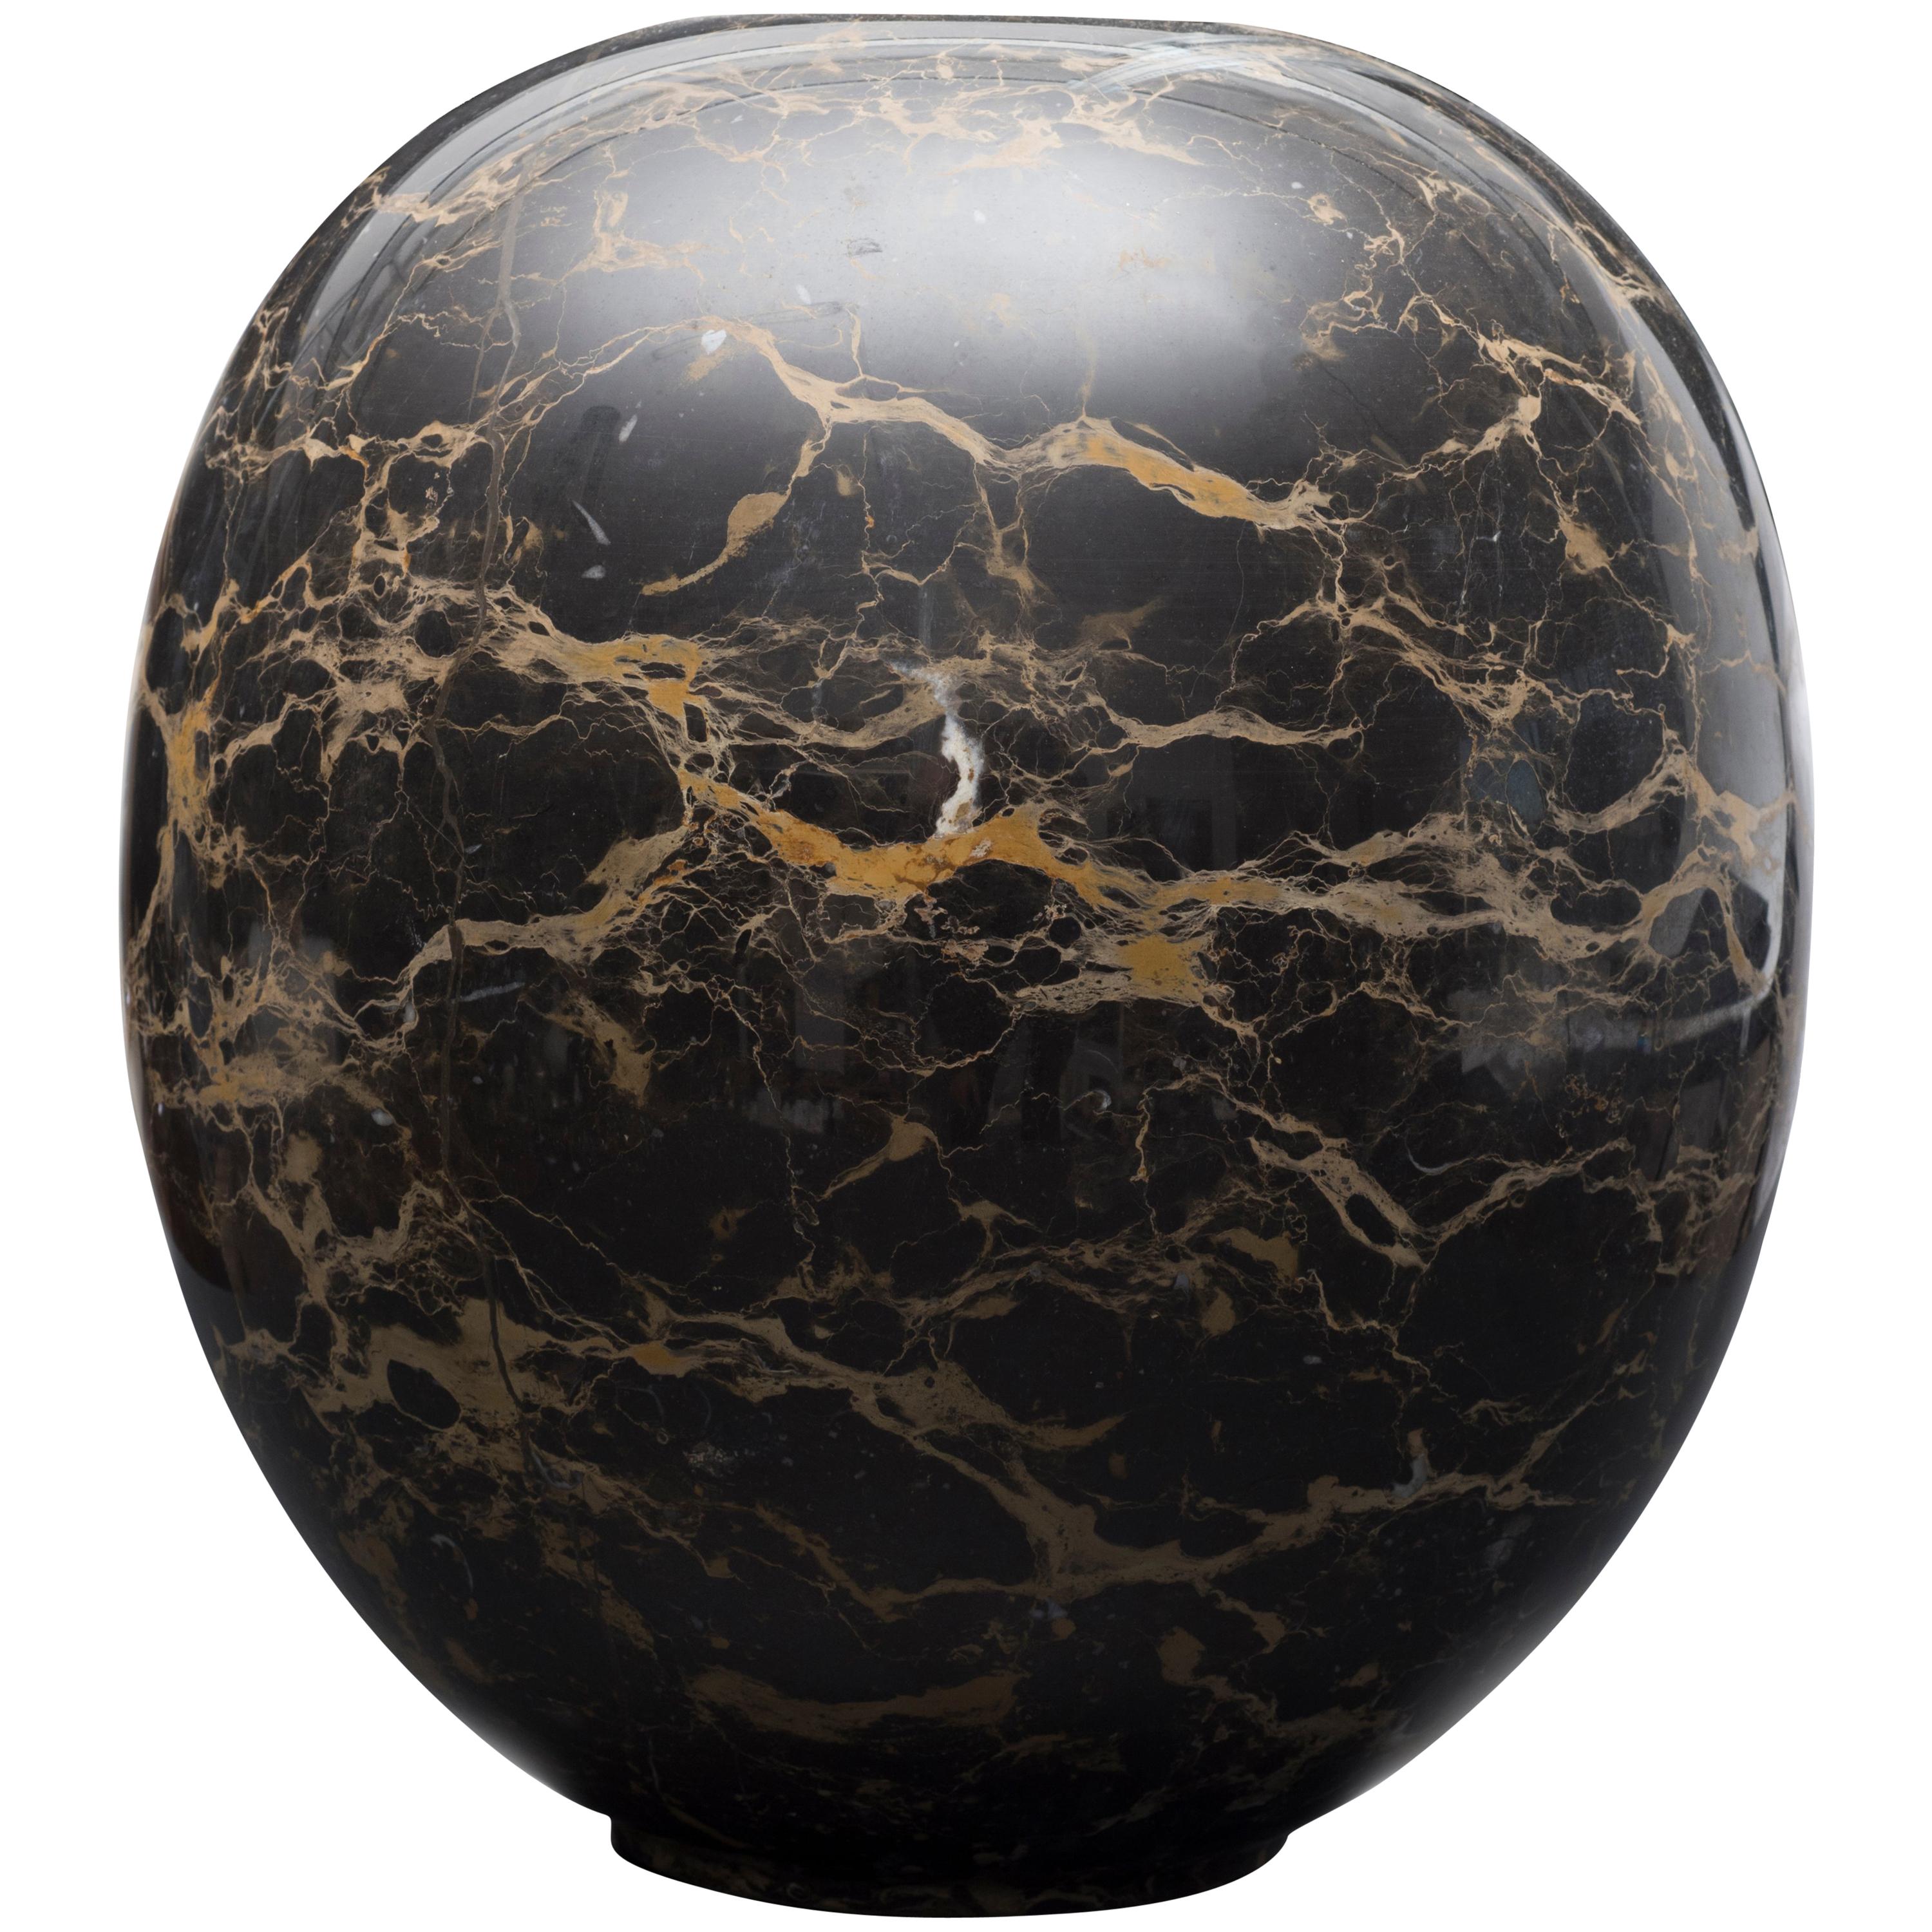 Black Marble Vase, Chinese Manufacture, 21st Century